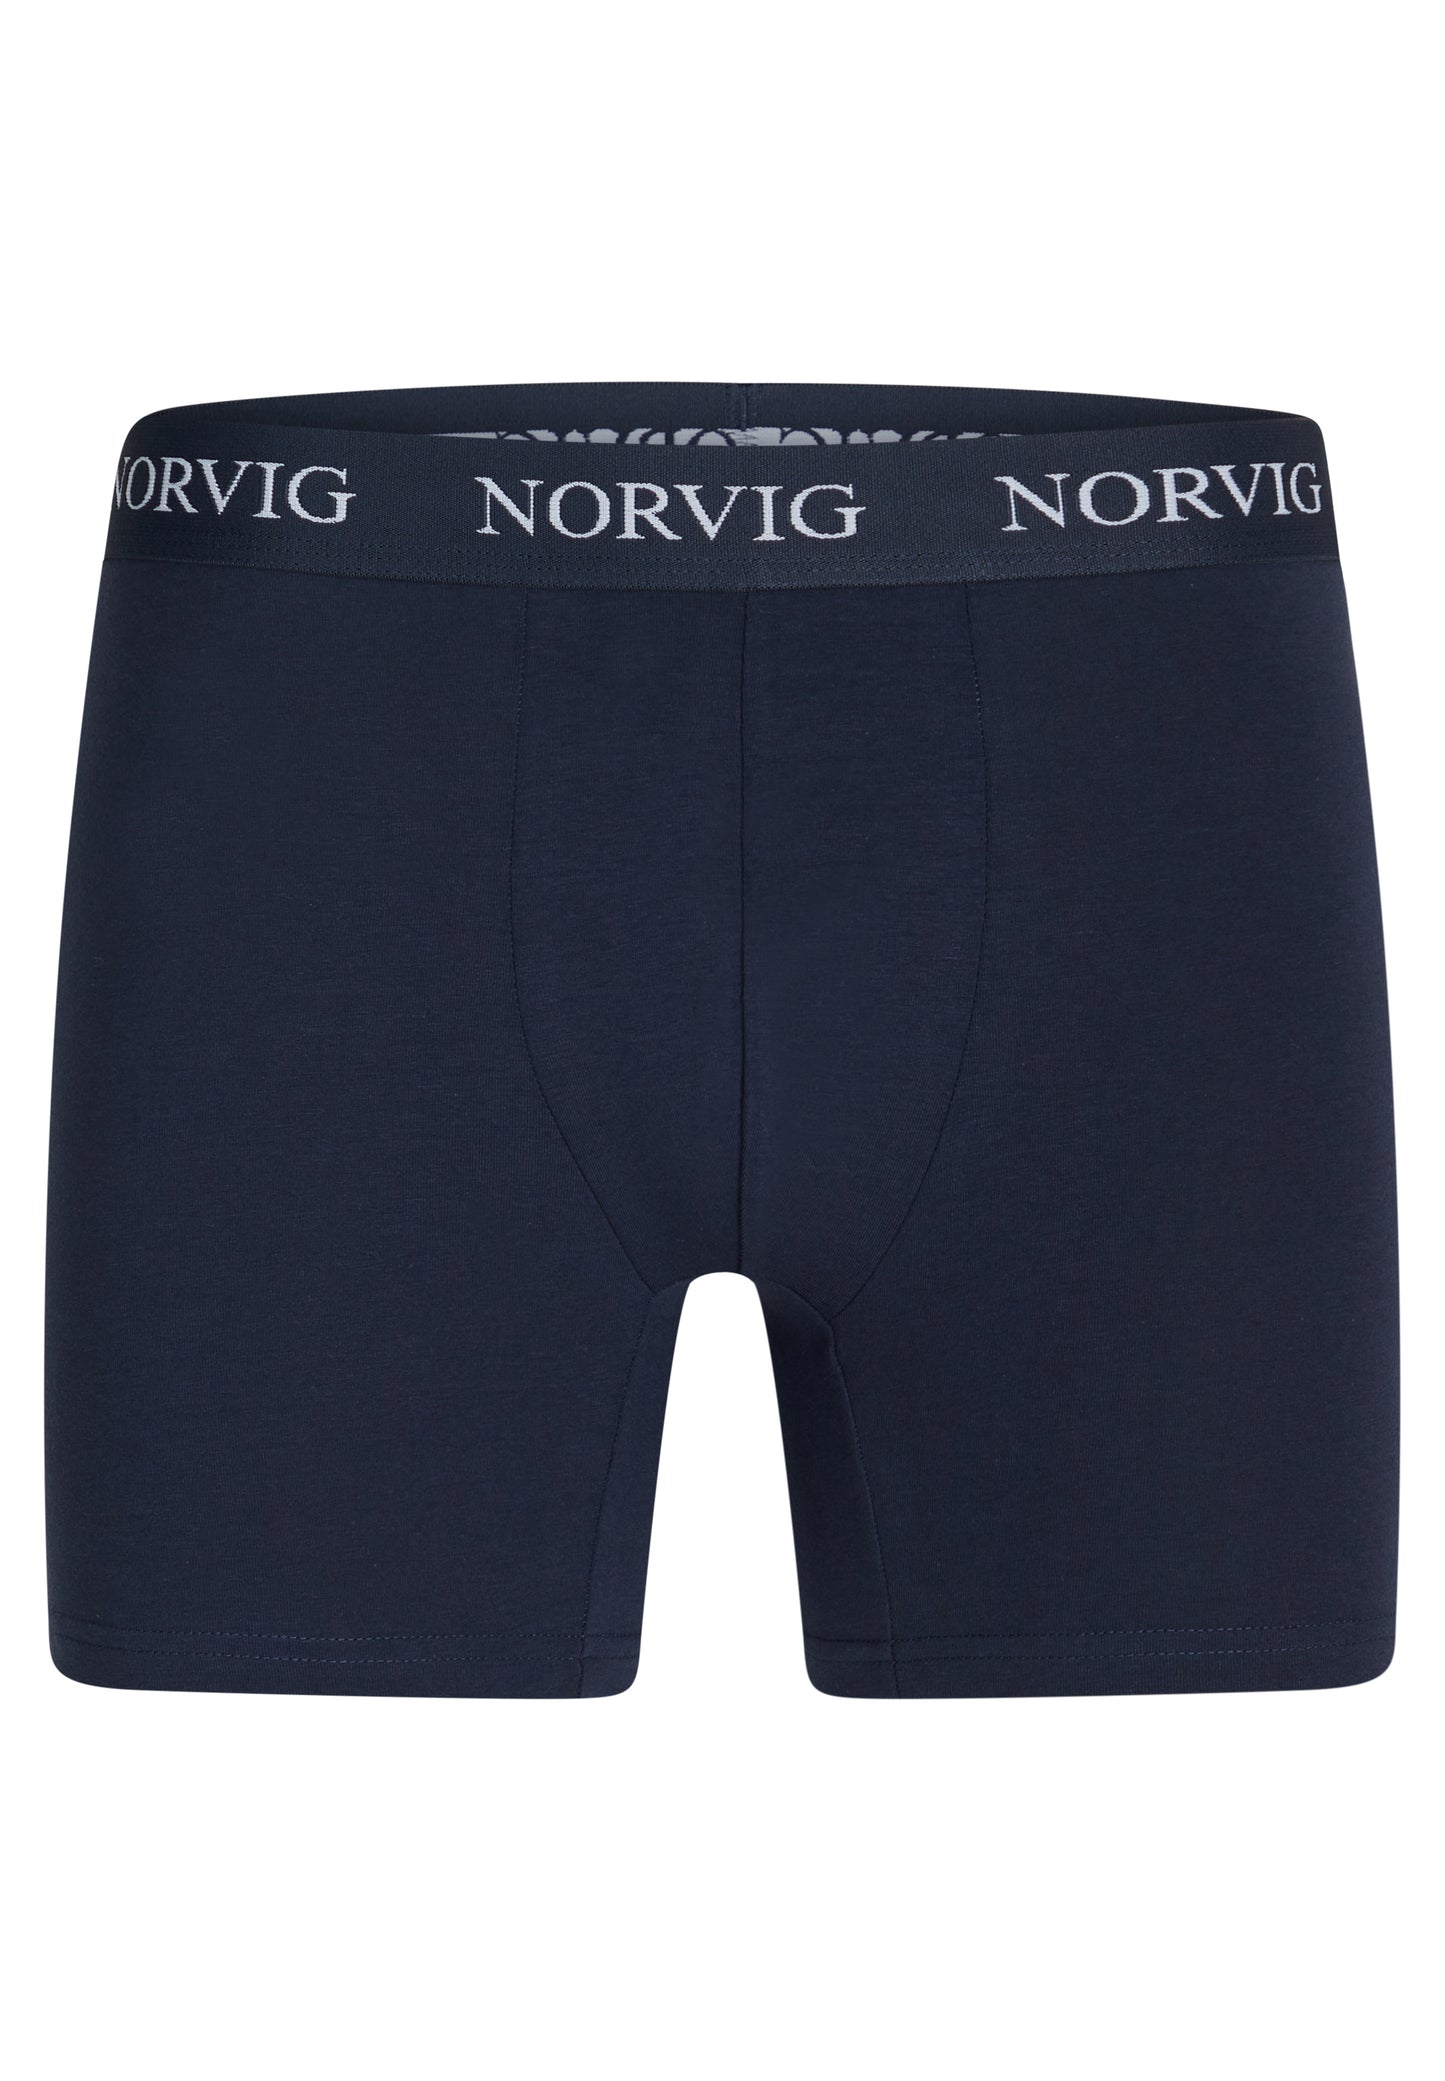 NORVIG 6-pak Tights sort/navy